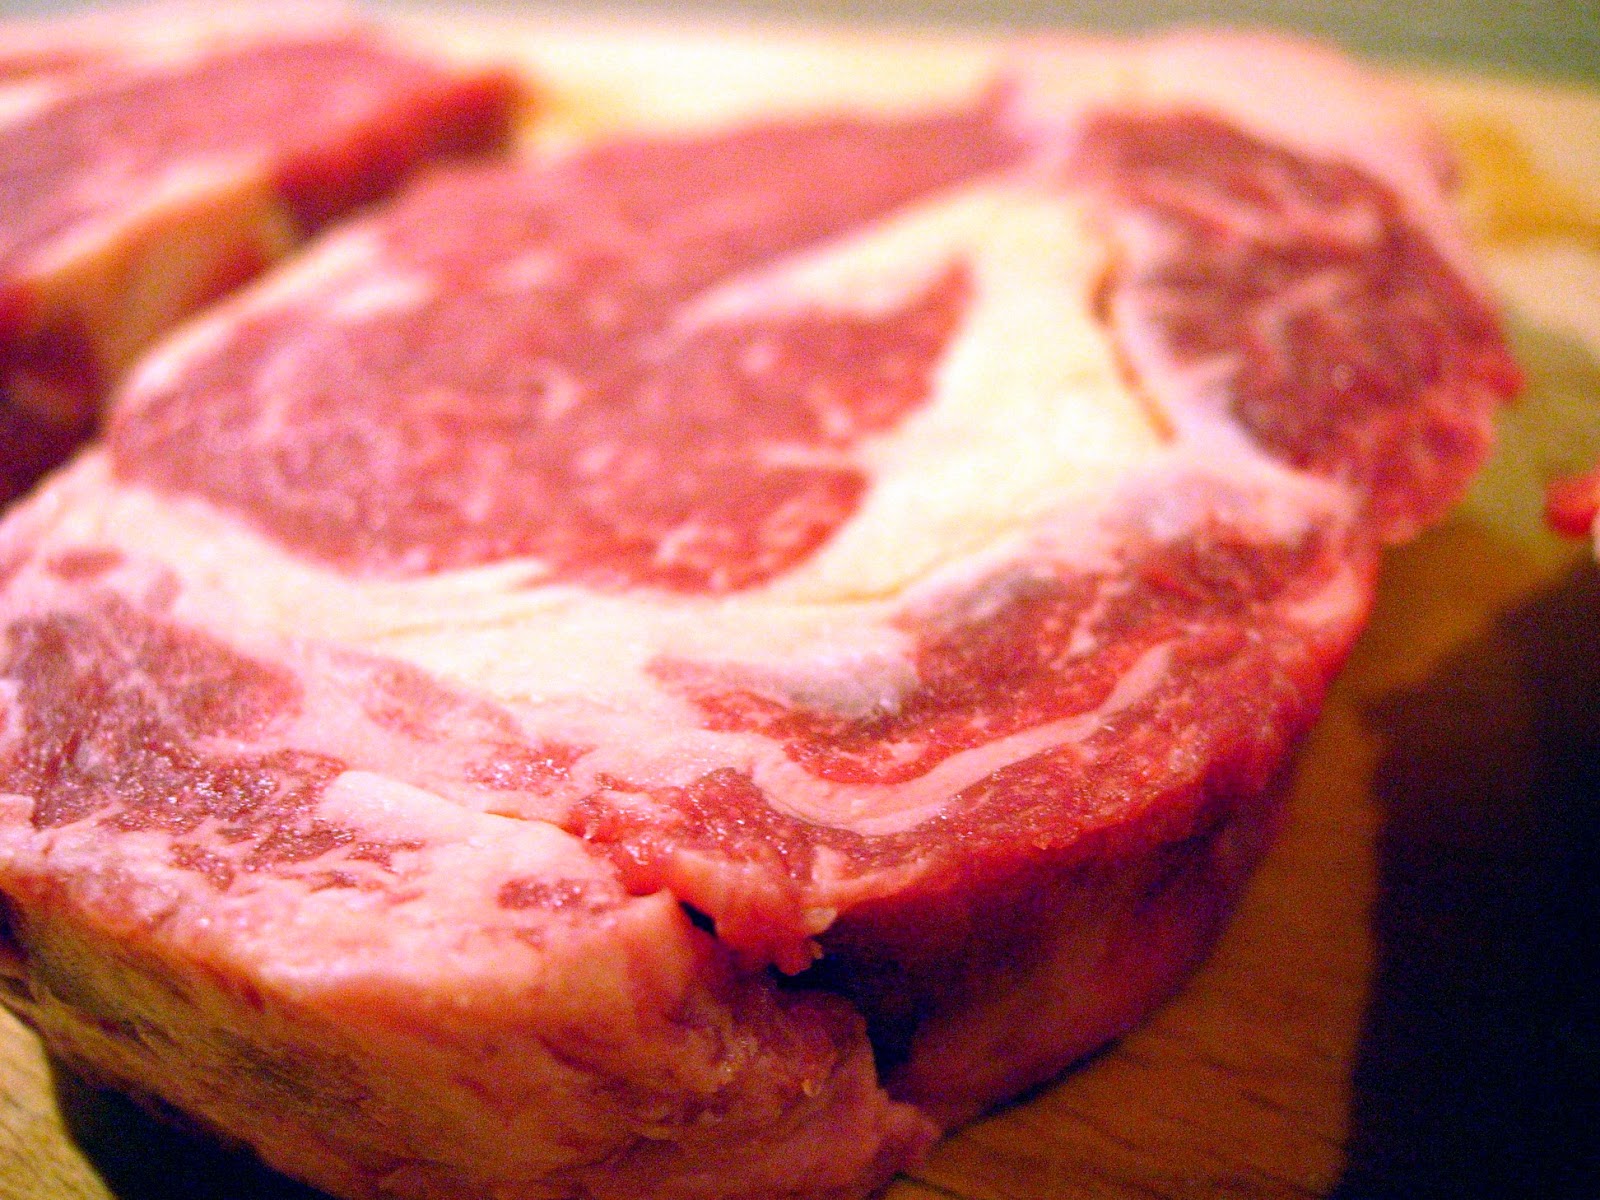 Casa, Coisas e Sabores: Tipos de corte de carne bovina: como escolher,  armazenar e preparar